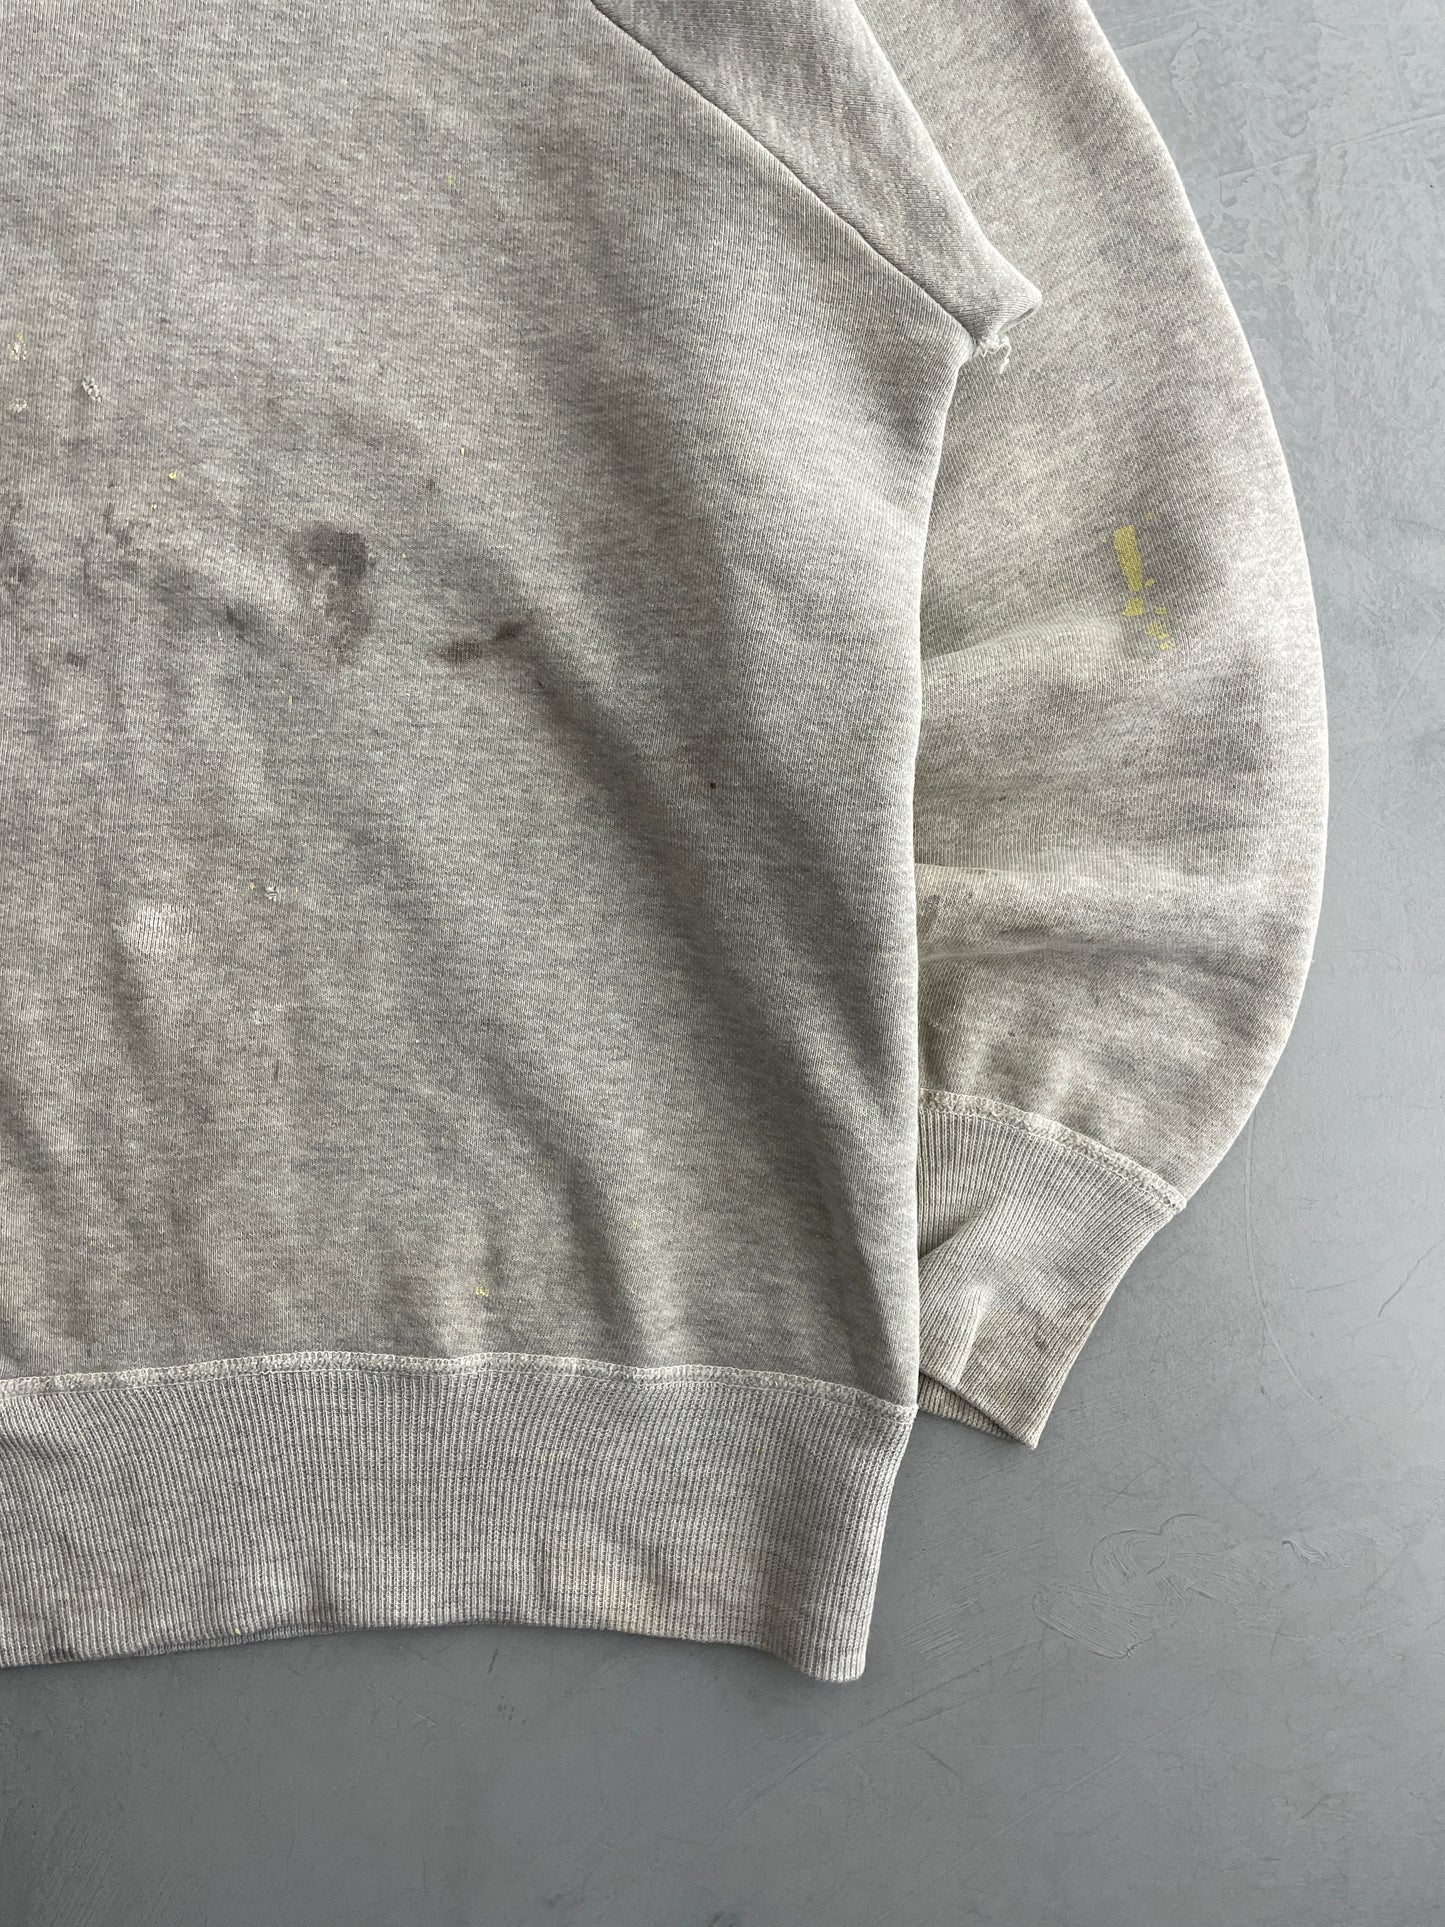 Thrashed 50's/60's Sweatshirt [M]